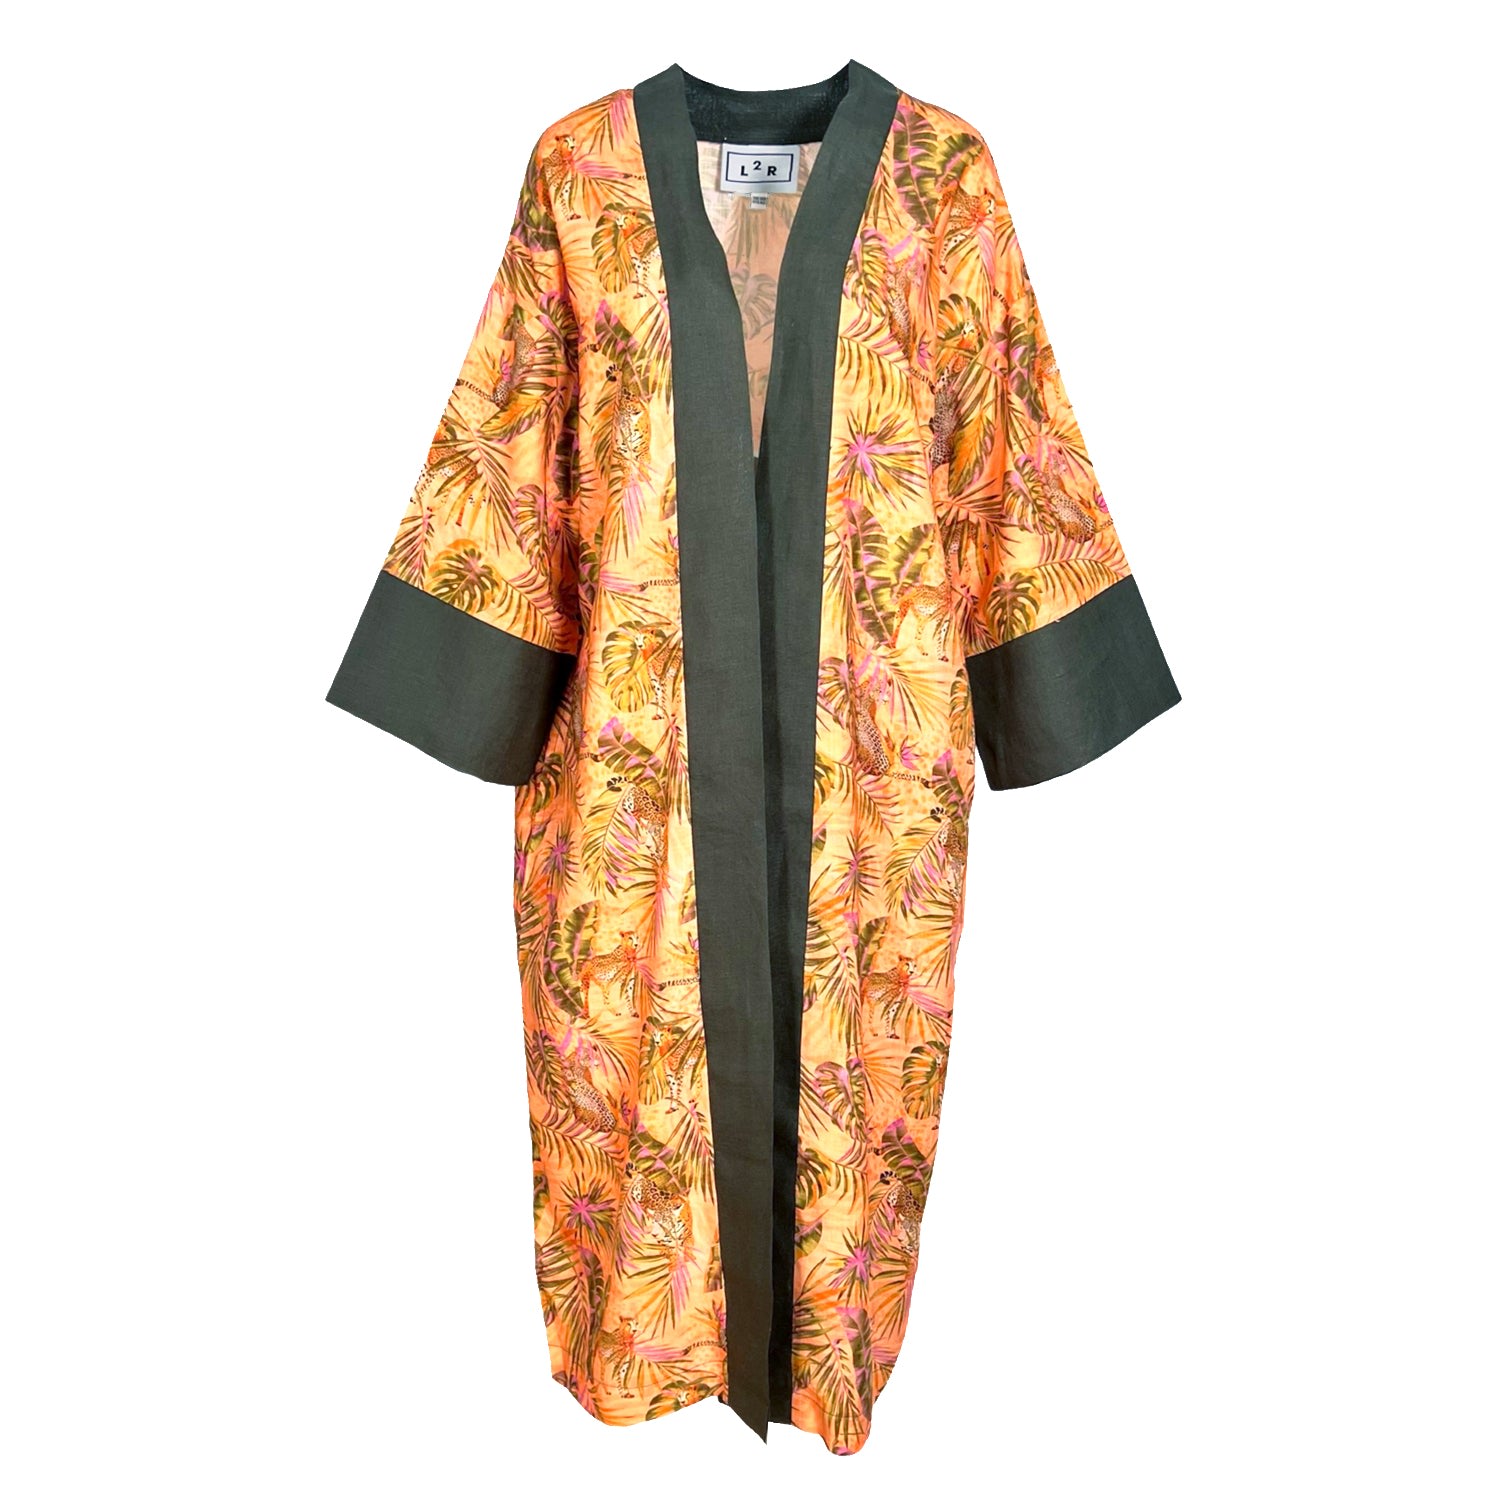 L2r The Label Women's Yellow / Orange Kaftan Kimono - Orange Jungle Print